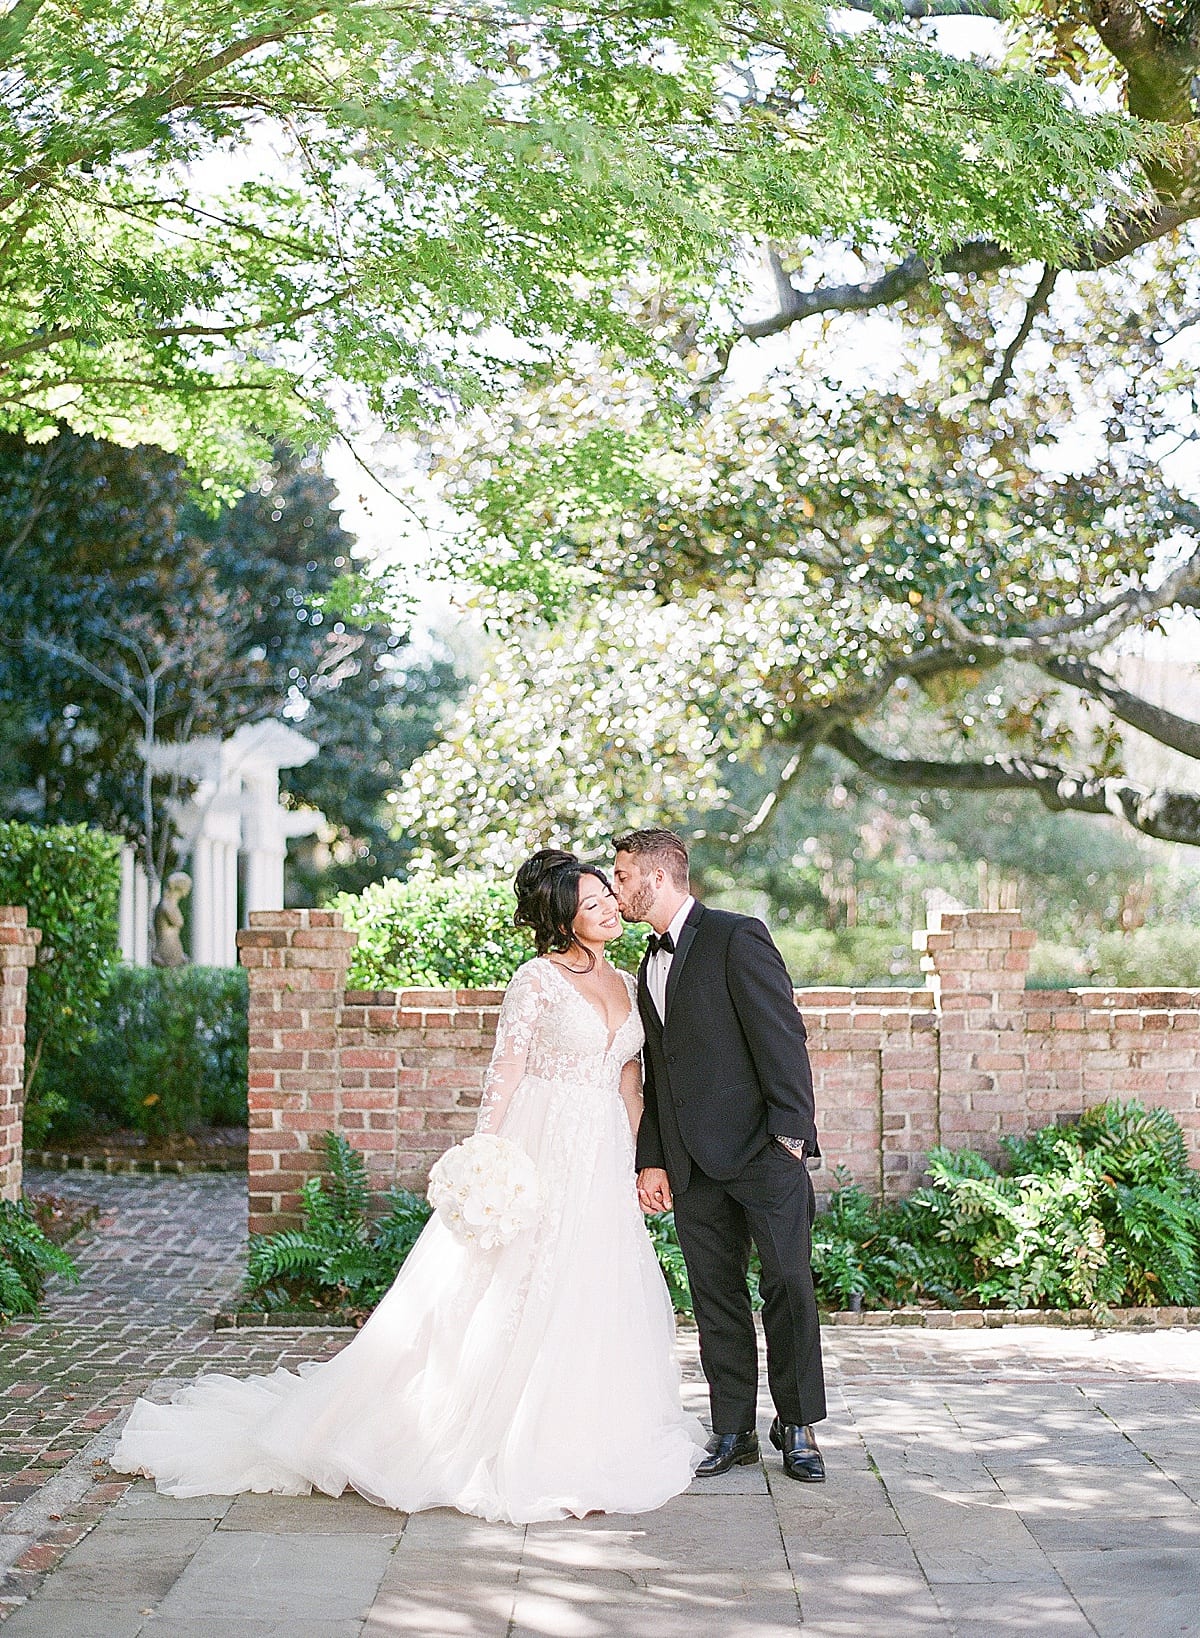 Groom Kissing Bride on the Cheek in Garden at William Aiken House Photo